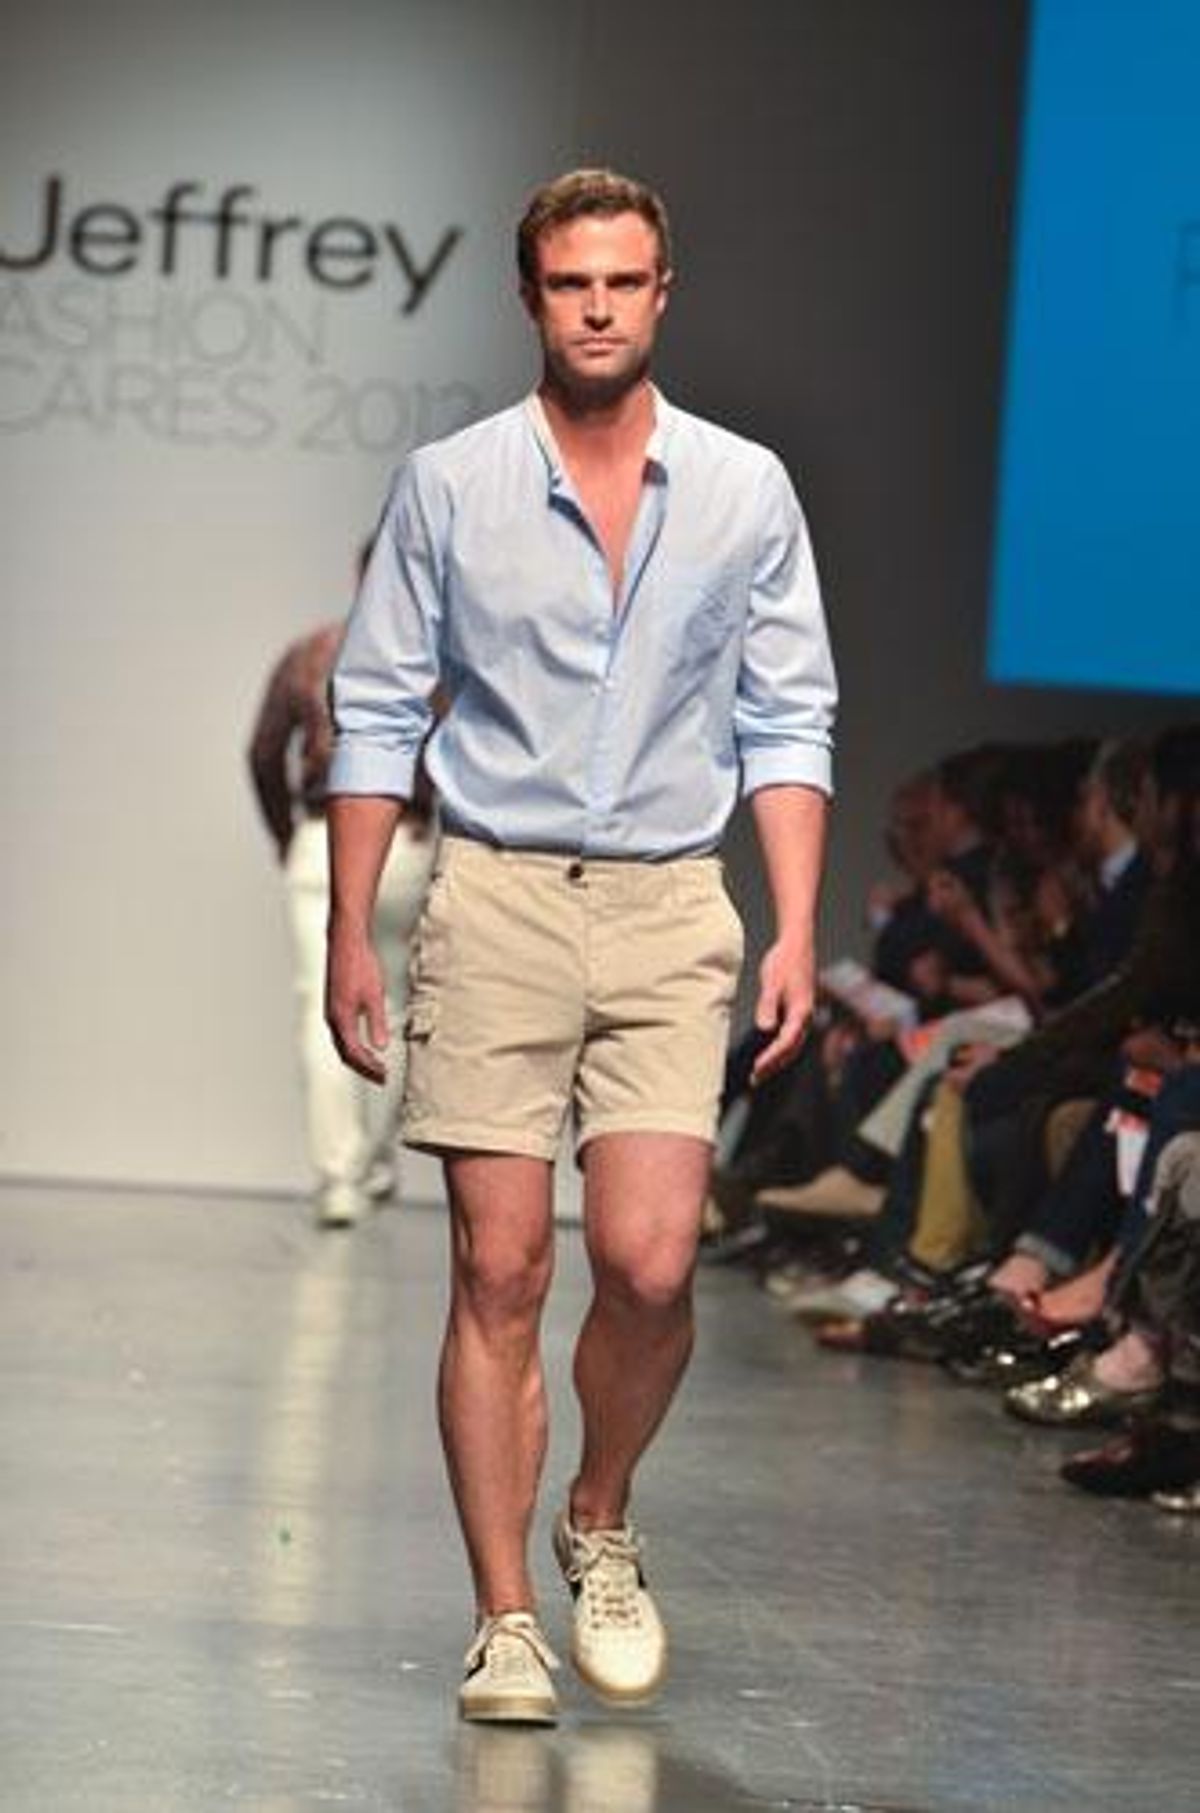 Jeffrey Fashion Cares 2012